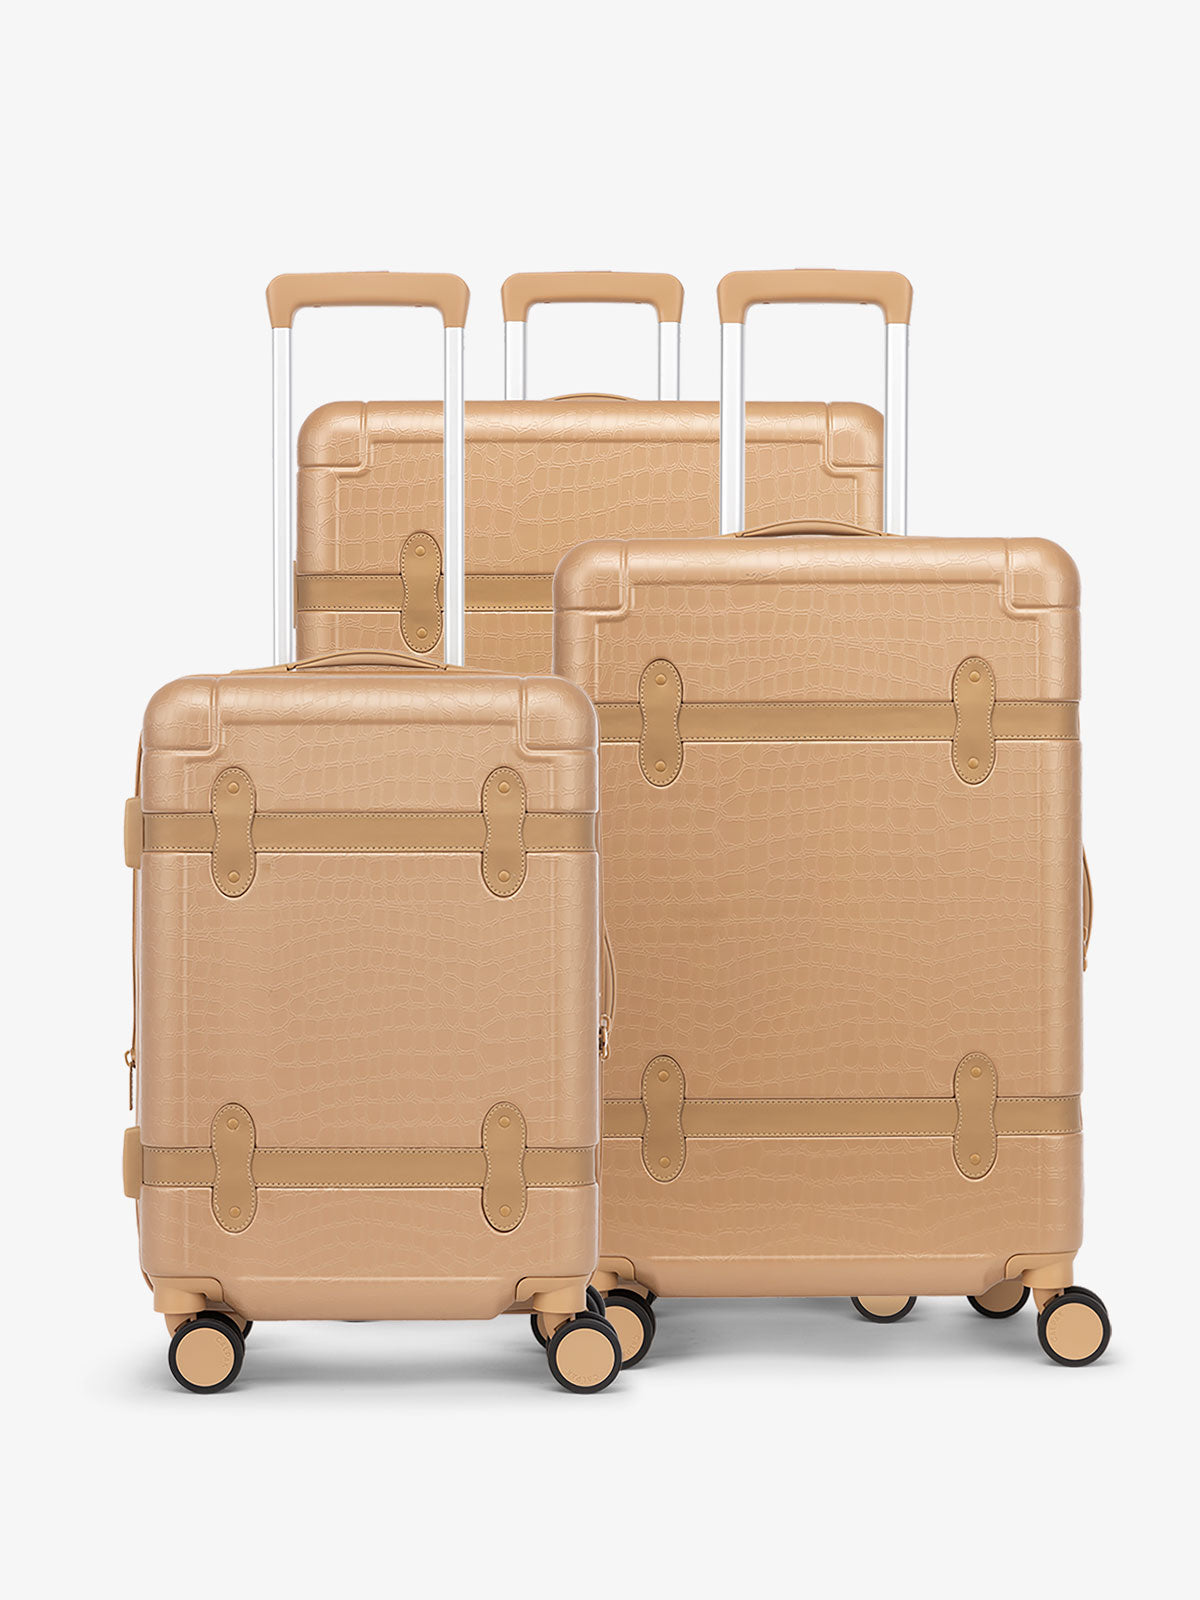 CALPAK set of 3 Trnk beige almond luggage in vintage trunk style; LTK3000-ALMOND